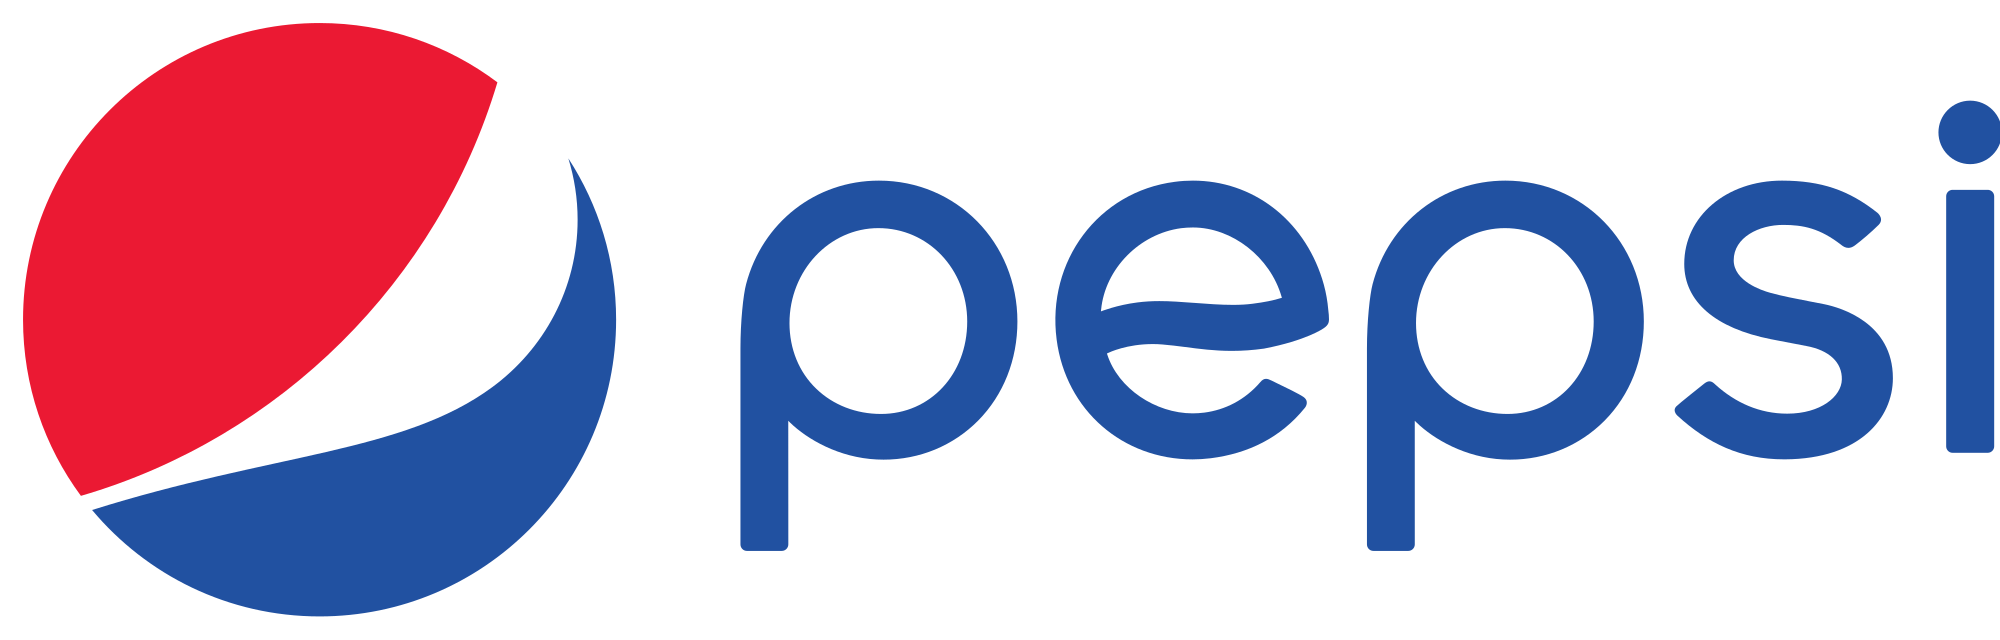 Open - Pepsi Logo Png 2017 (2000x640), Png Download